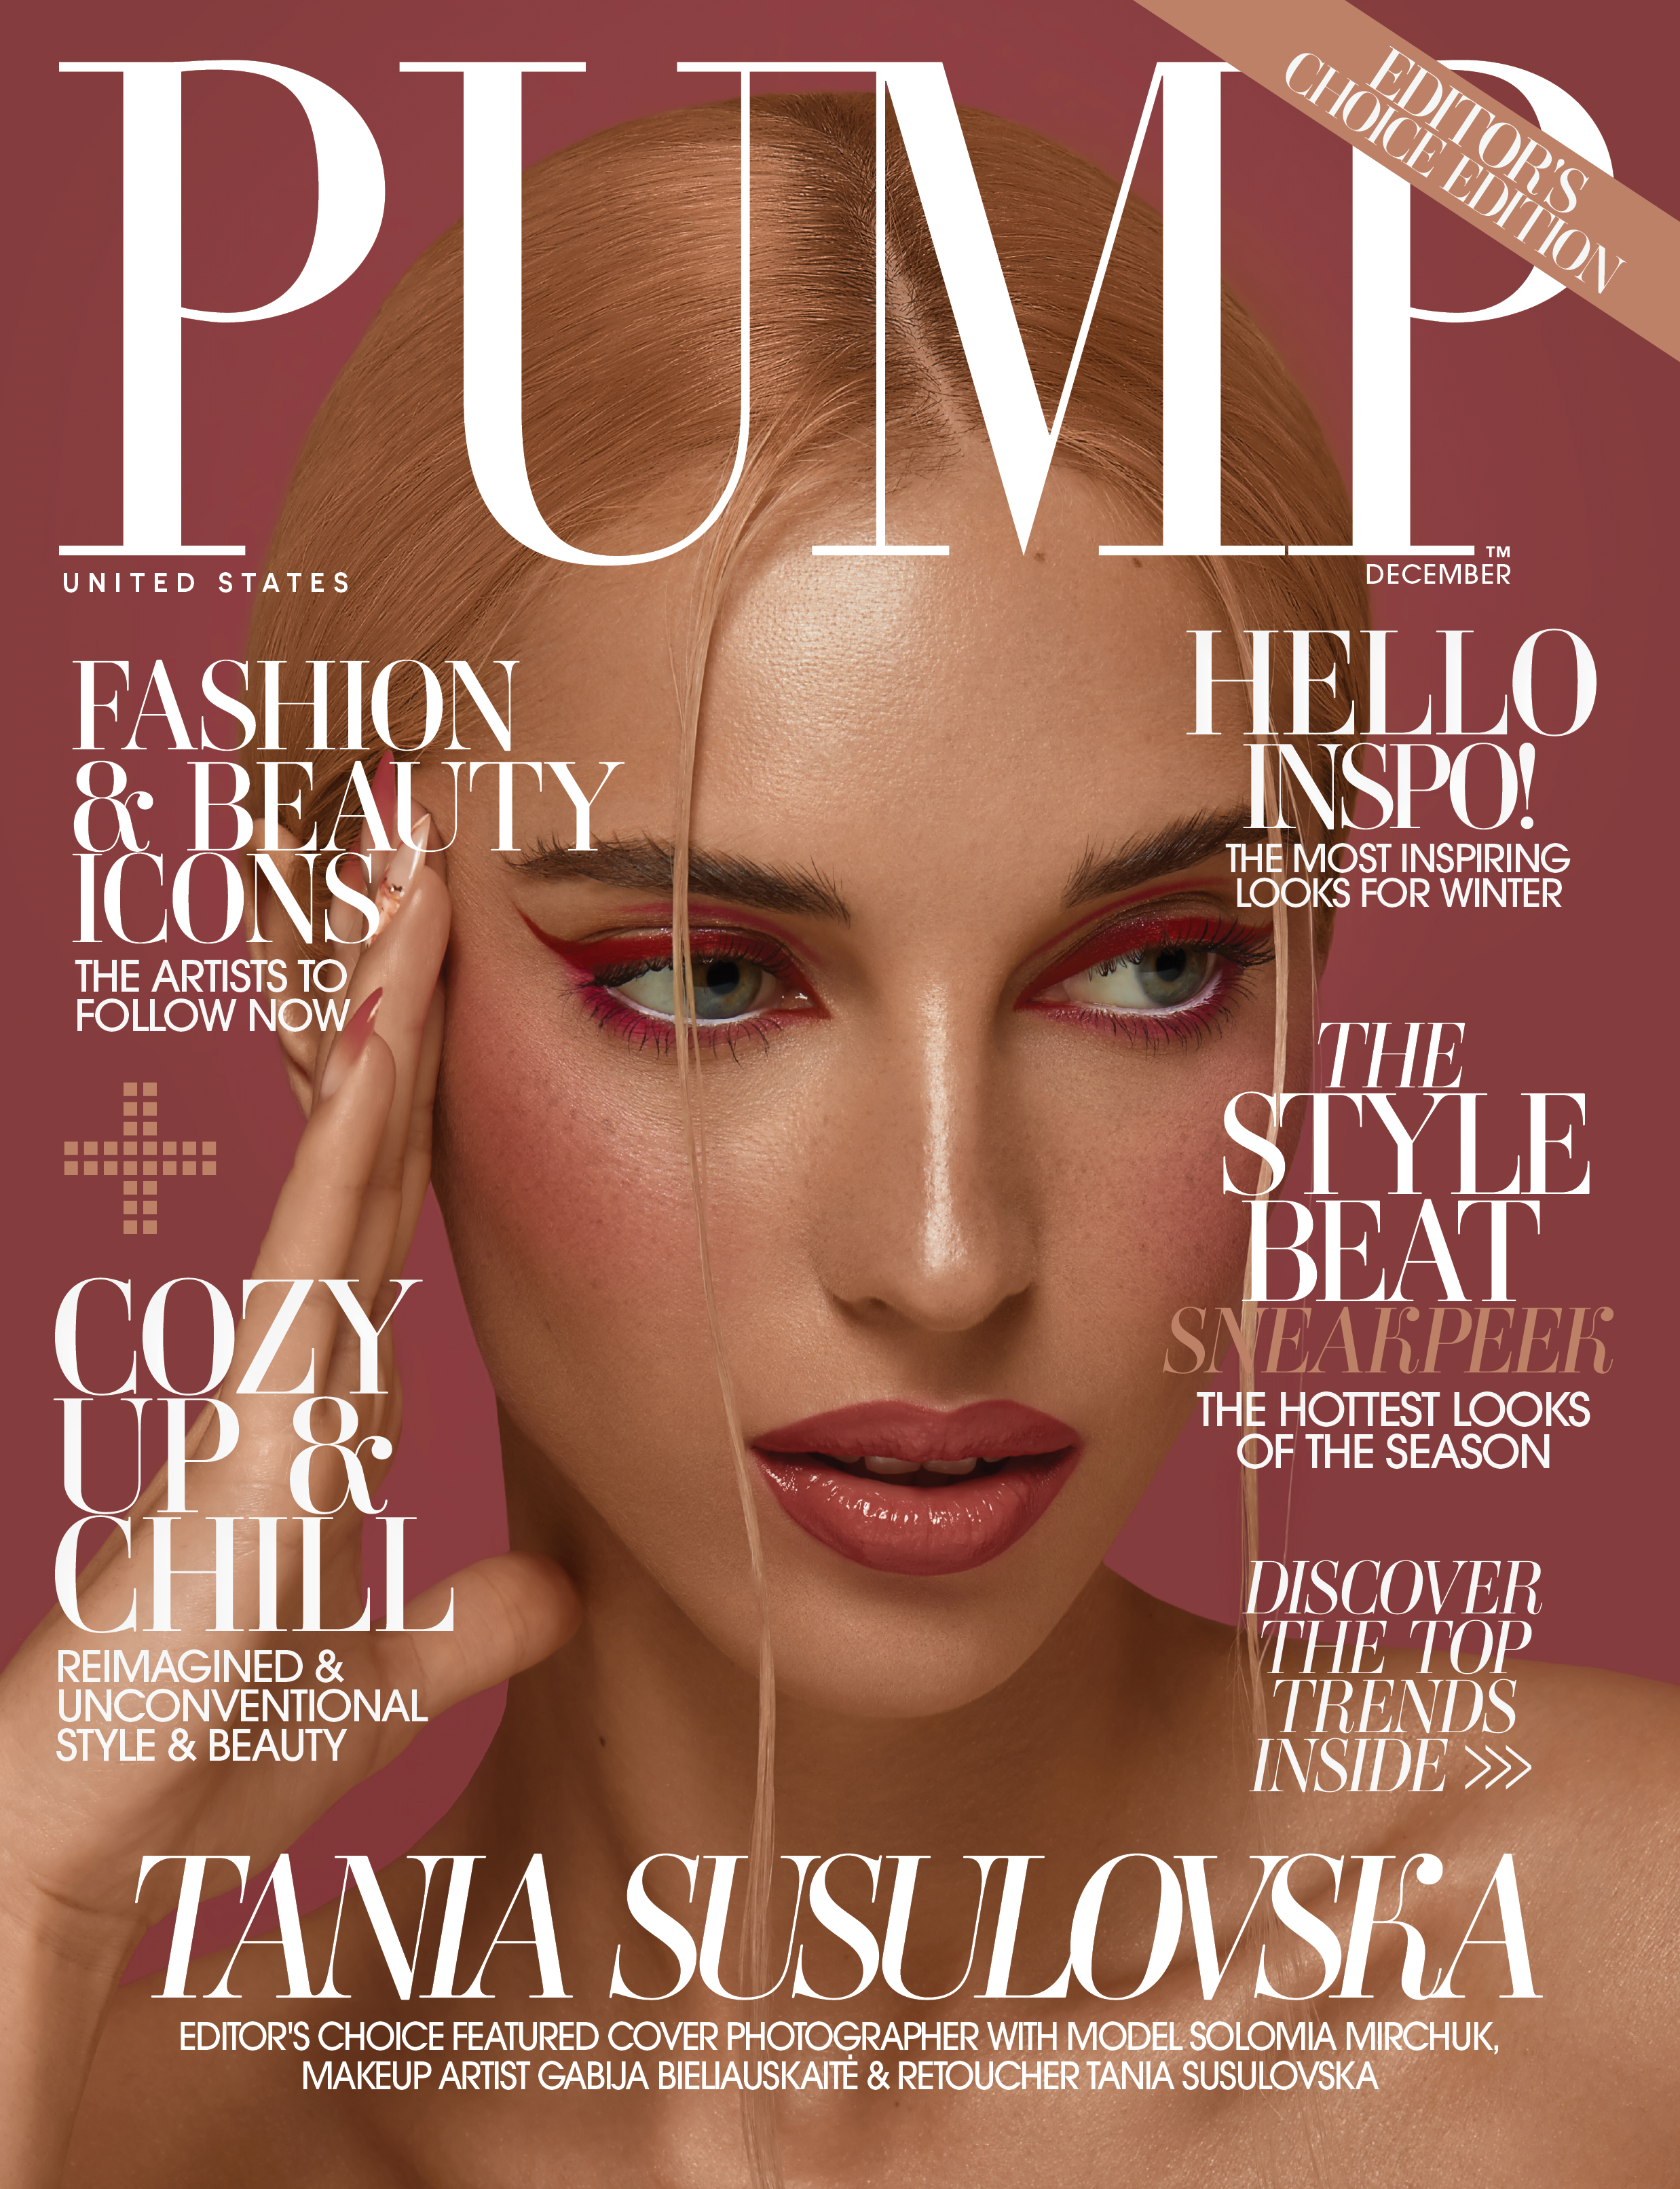 PUMP Magazine %7C The Vintage Fashion %26 Beauty Edition %7C Editor%27s Choice %7C Vol.2 %7C December 2021.png